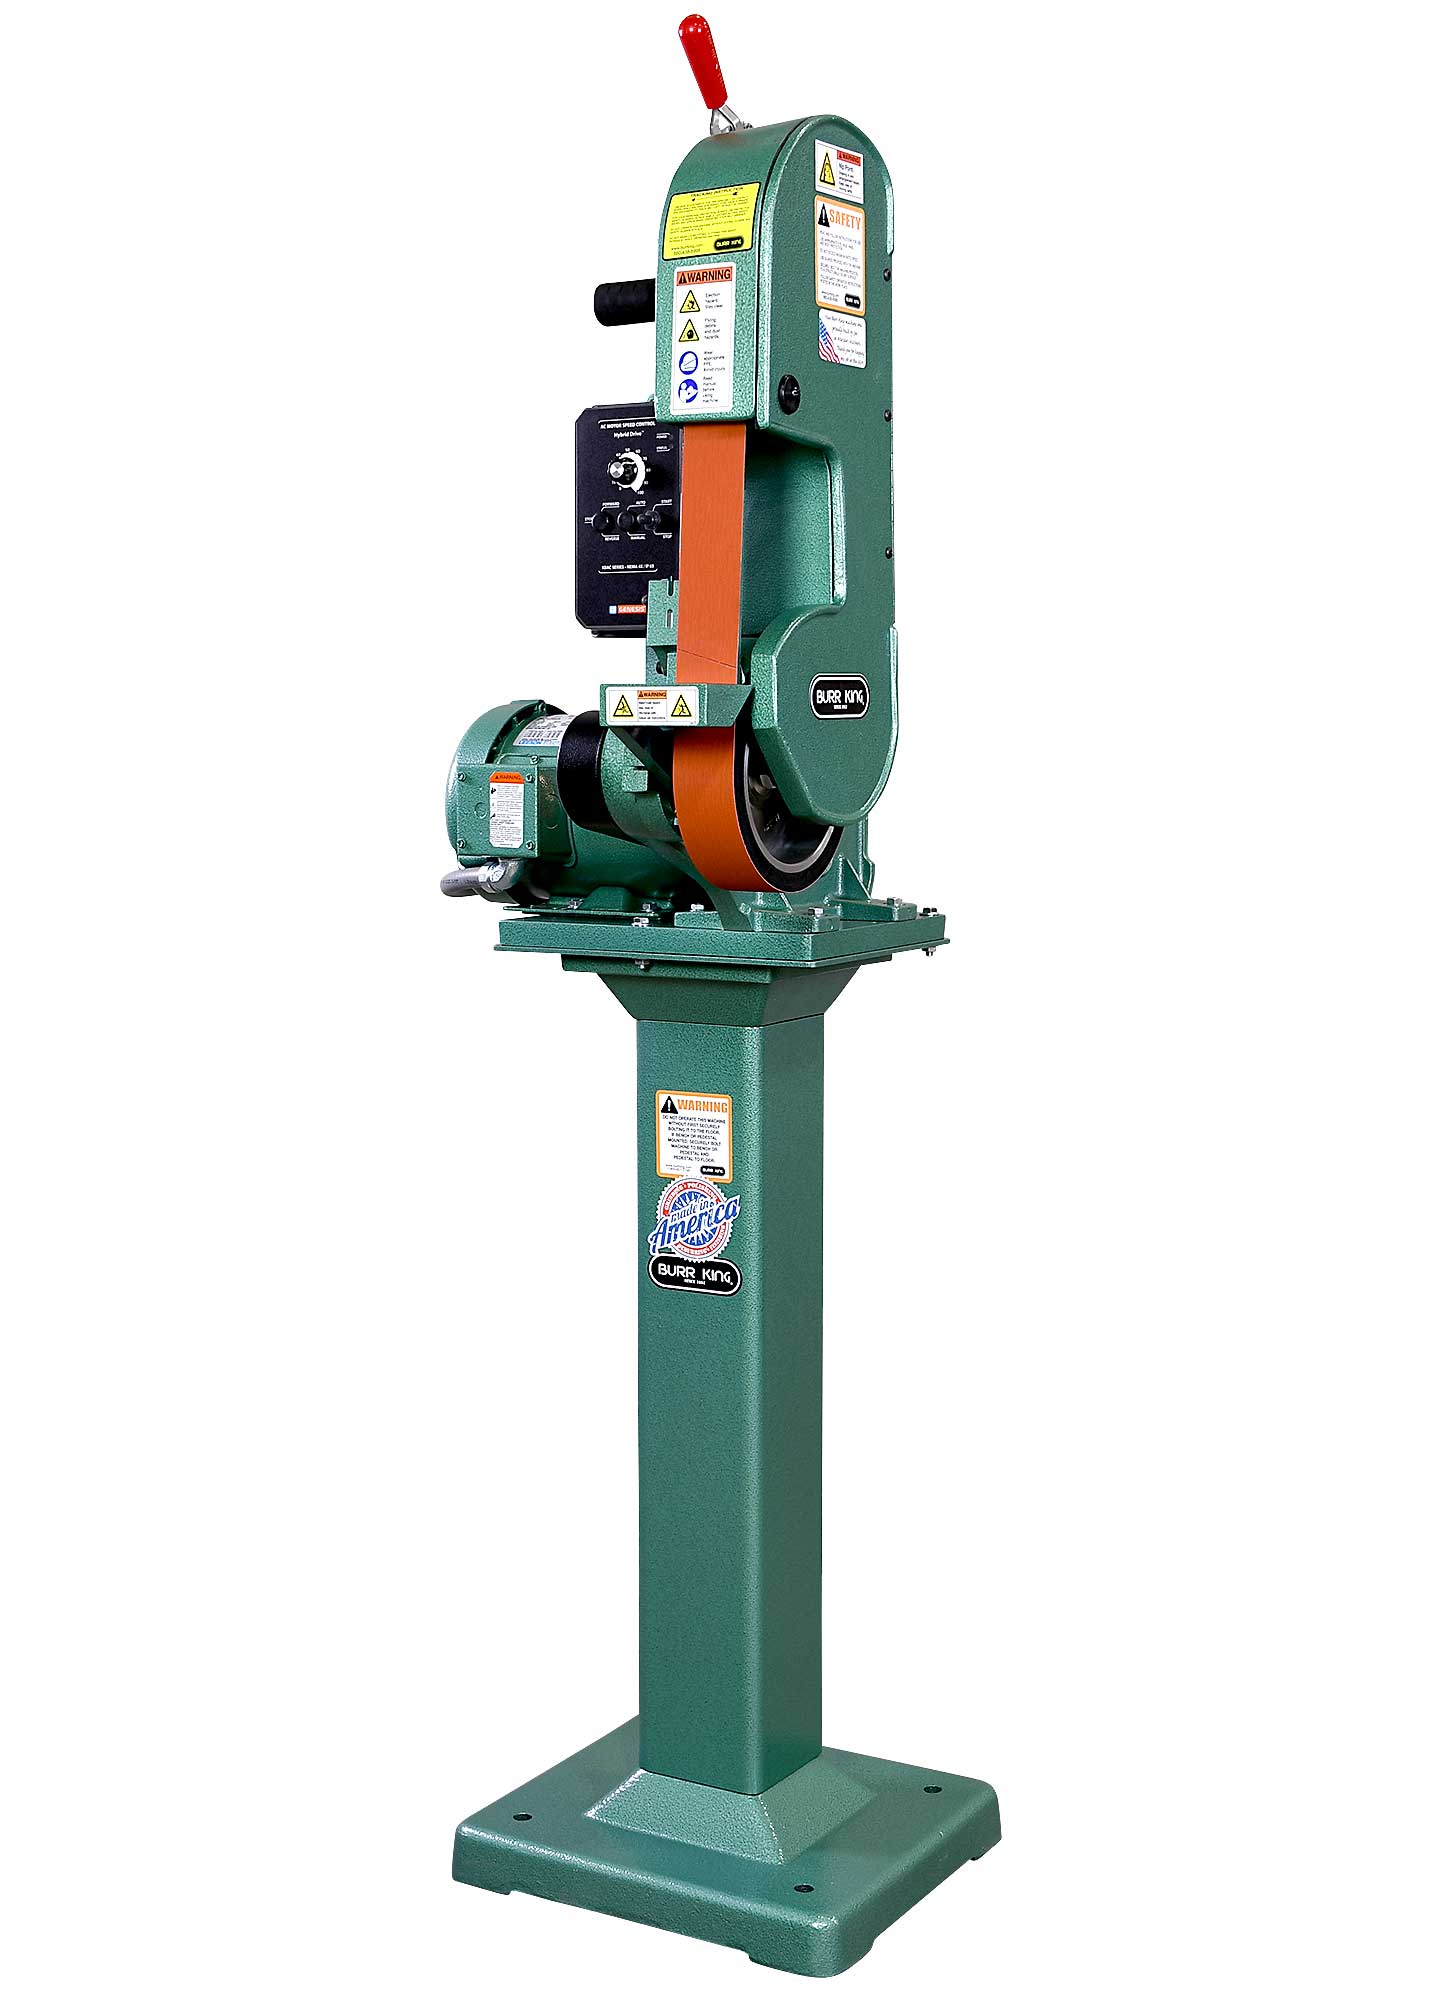 24821 - X400 variable speed belt grinder shown with optional 01 pedestal.